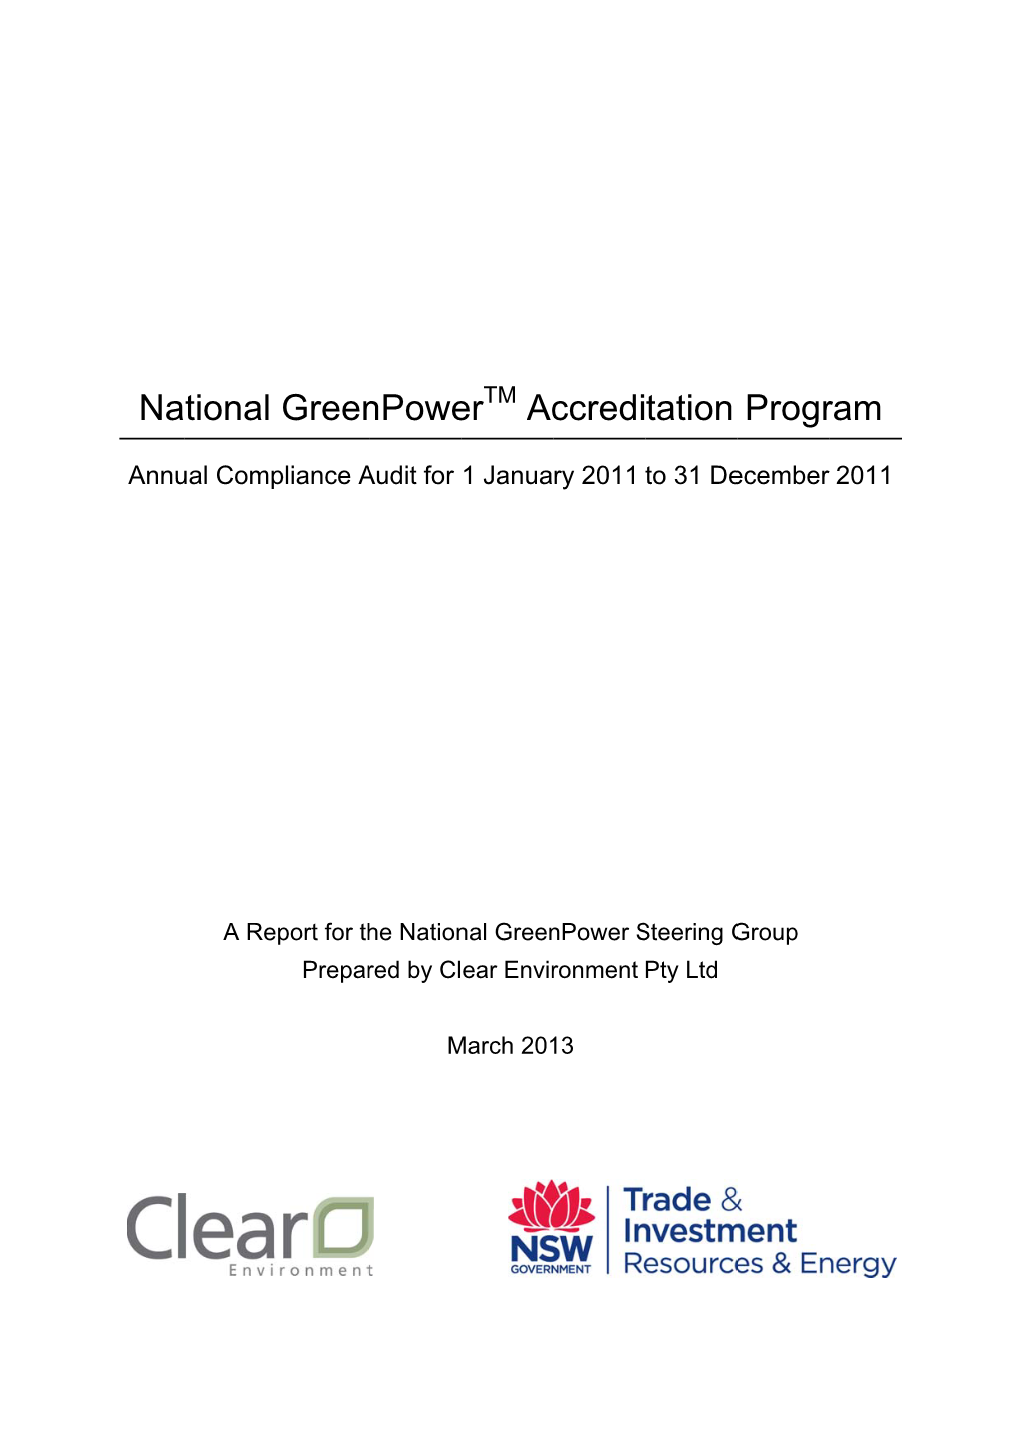 Greenpower 2011 Annual Audit Report FINAL.Pdf